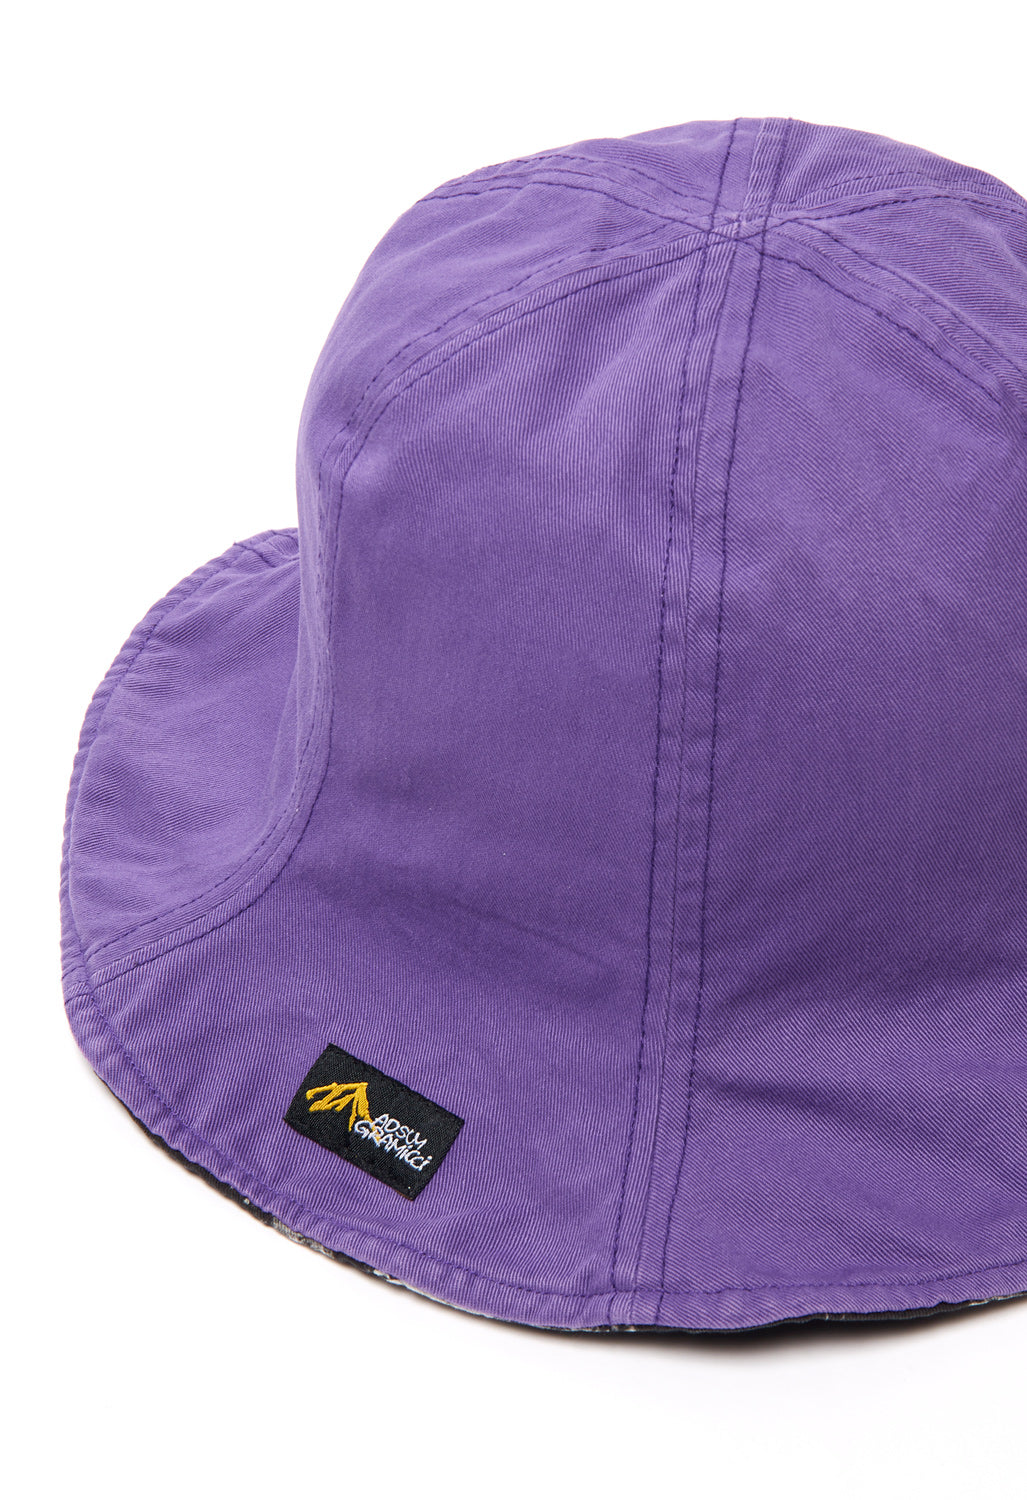 Gramicci x Adsum Men's Reversible Tulip Bucket Hat - Print and Purple